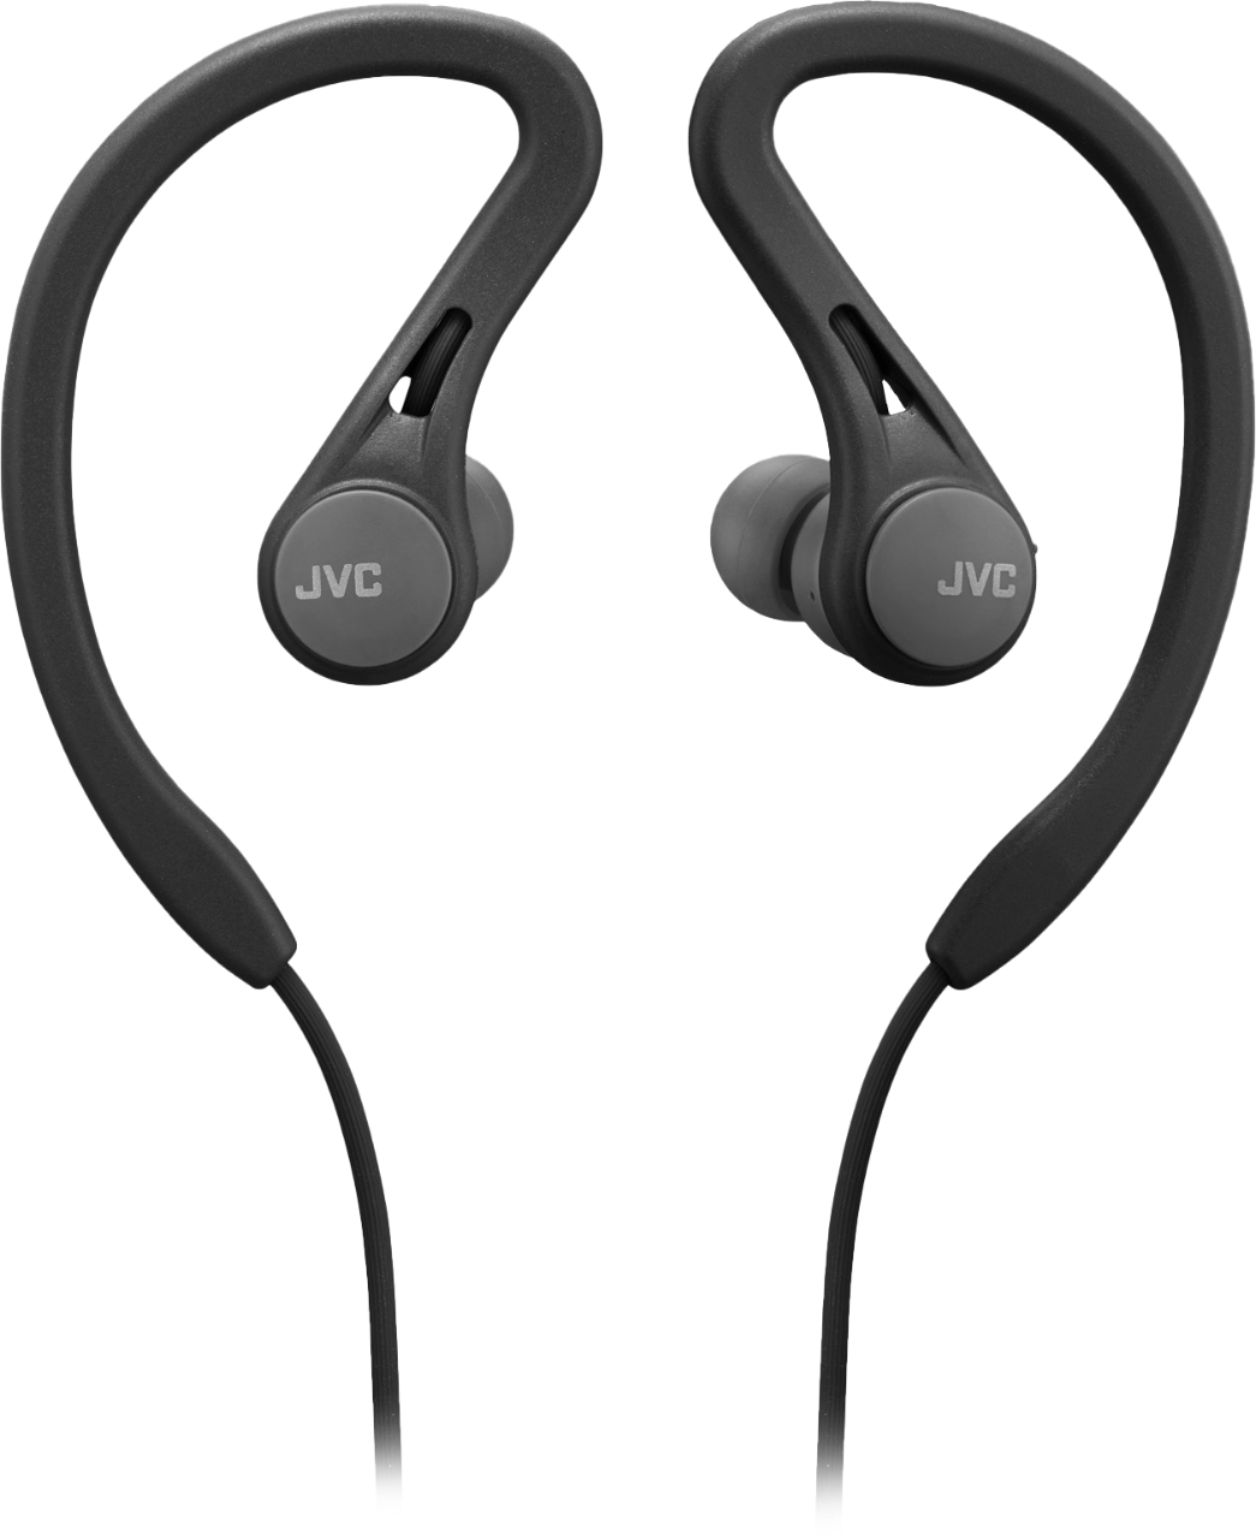 JVC Bluetooth Headphones, Wireless, Sweat Proof IPX2, Pivot Fit